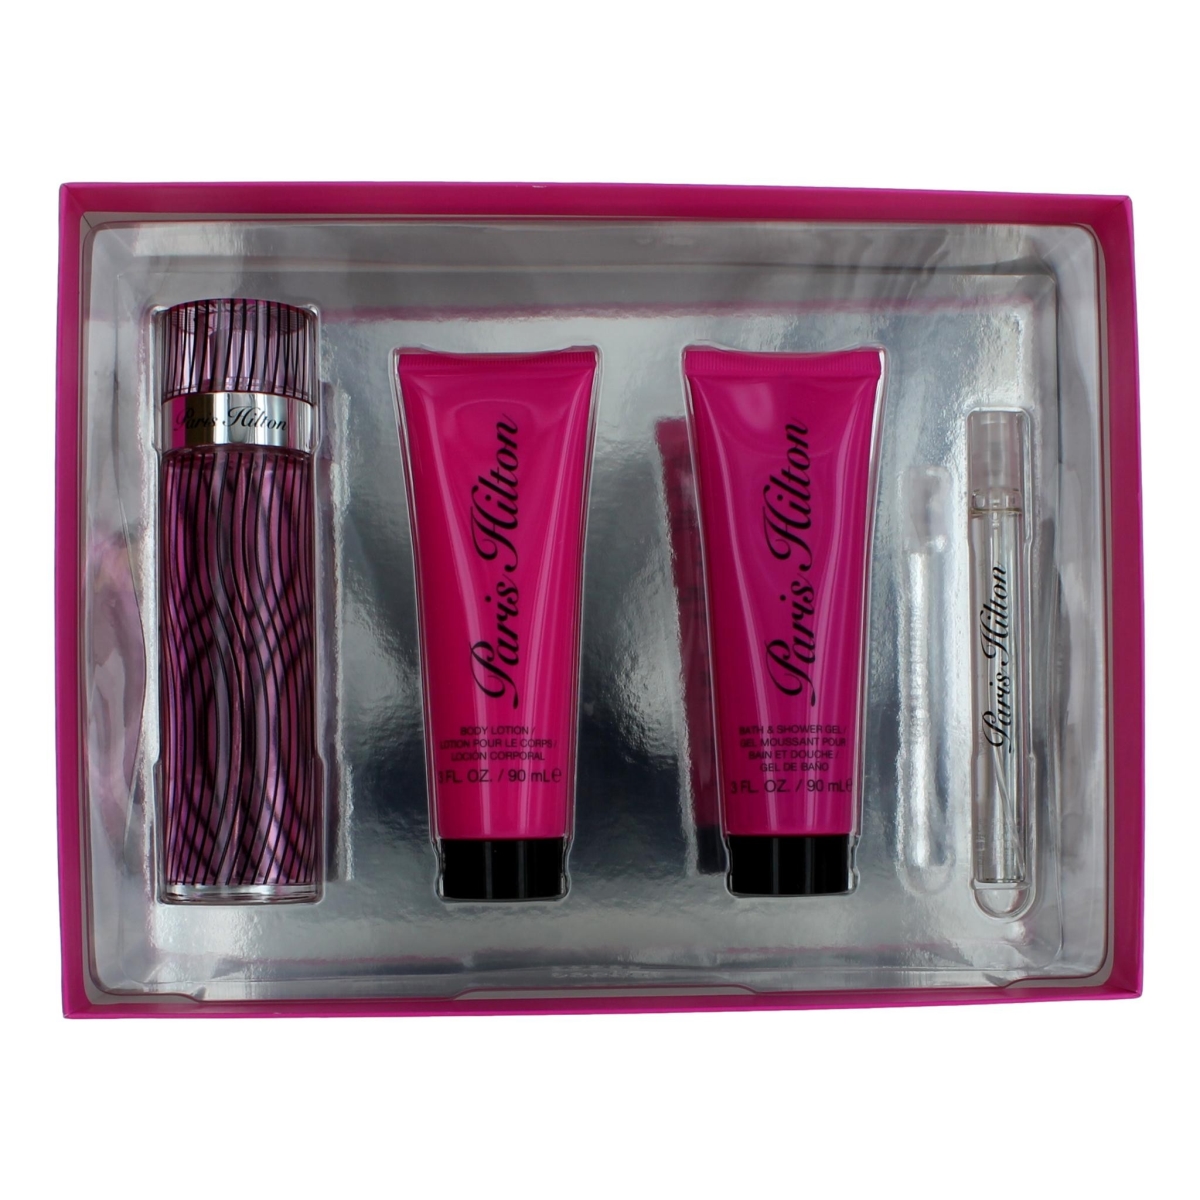 Paris Hilton awgprh43422 Paris Hilton Gift Set with Travel Spray for Women - 4 Piece